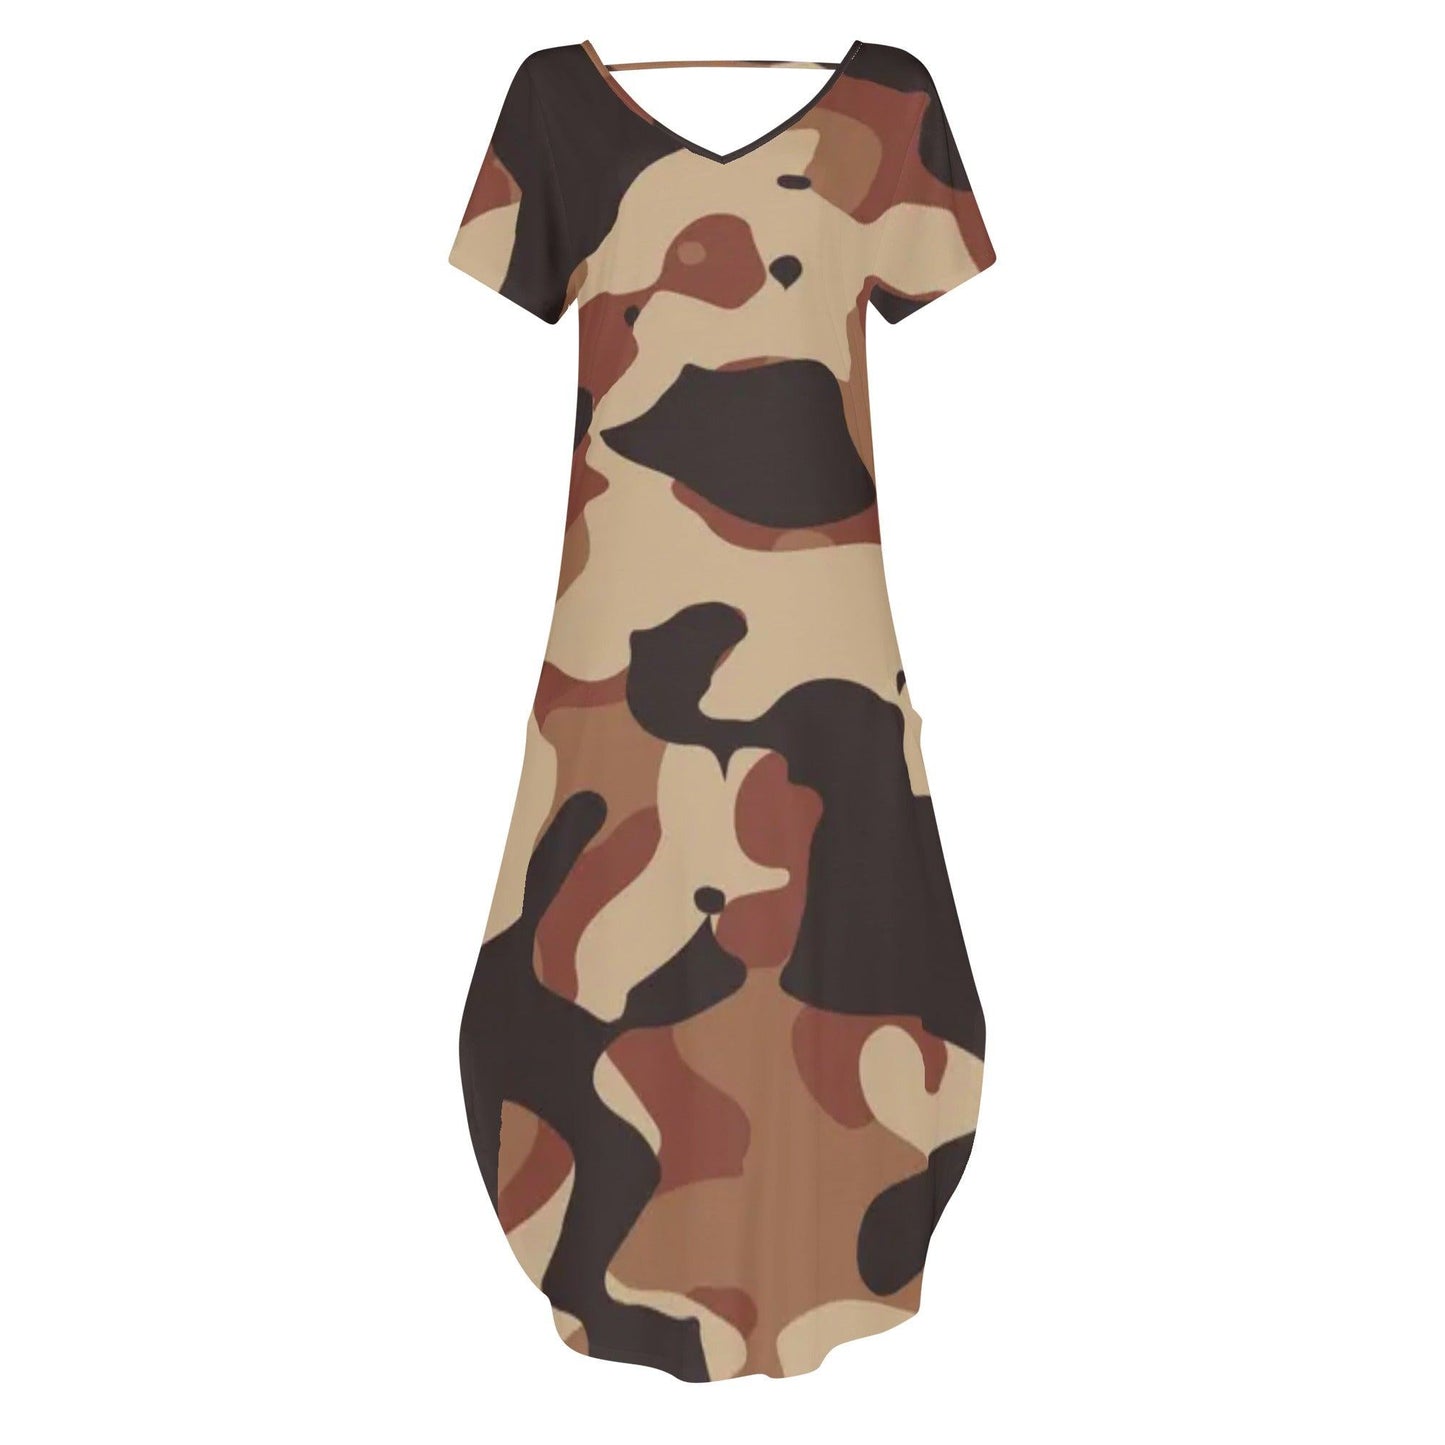 Brown Camouflage kurzärmliges drapiertes Kleid drapiertes Kleid 63.99 Brown, Camouflage, drapiert, kleid, kurzärmlig JLR Design